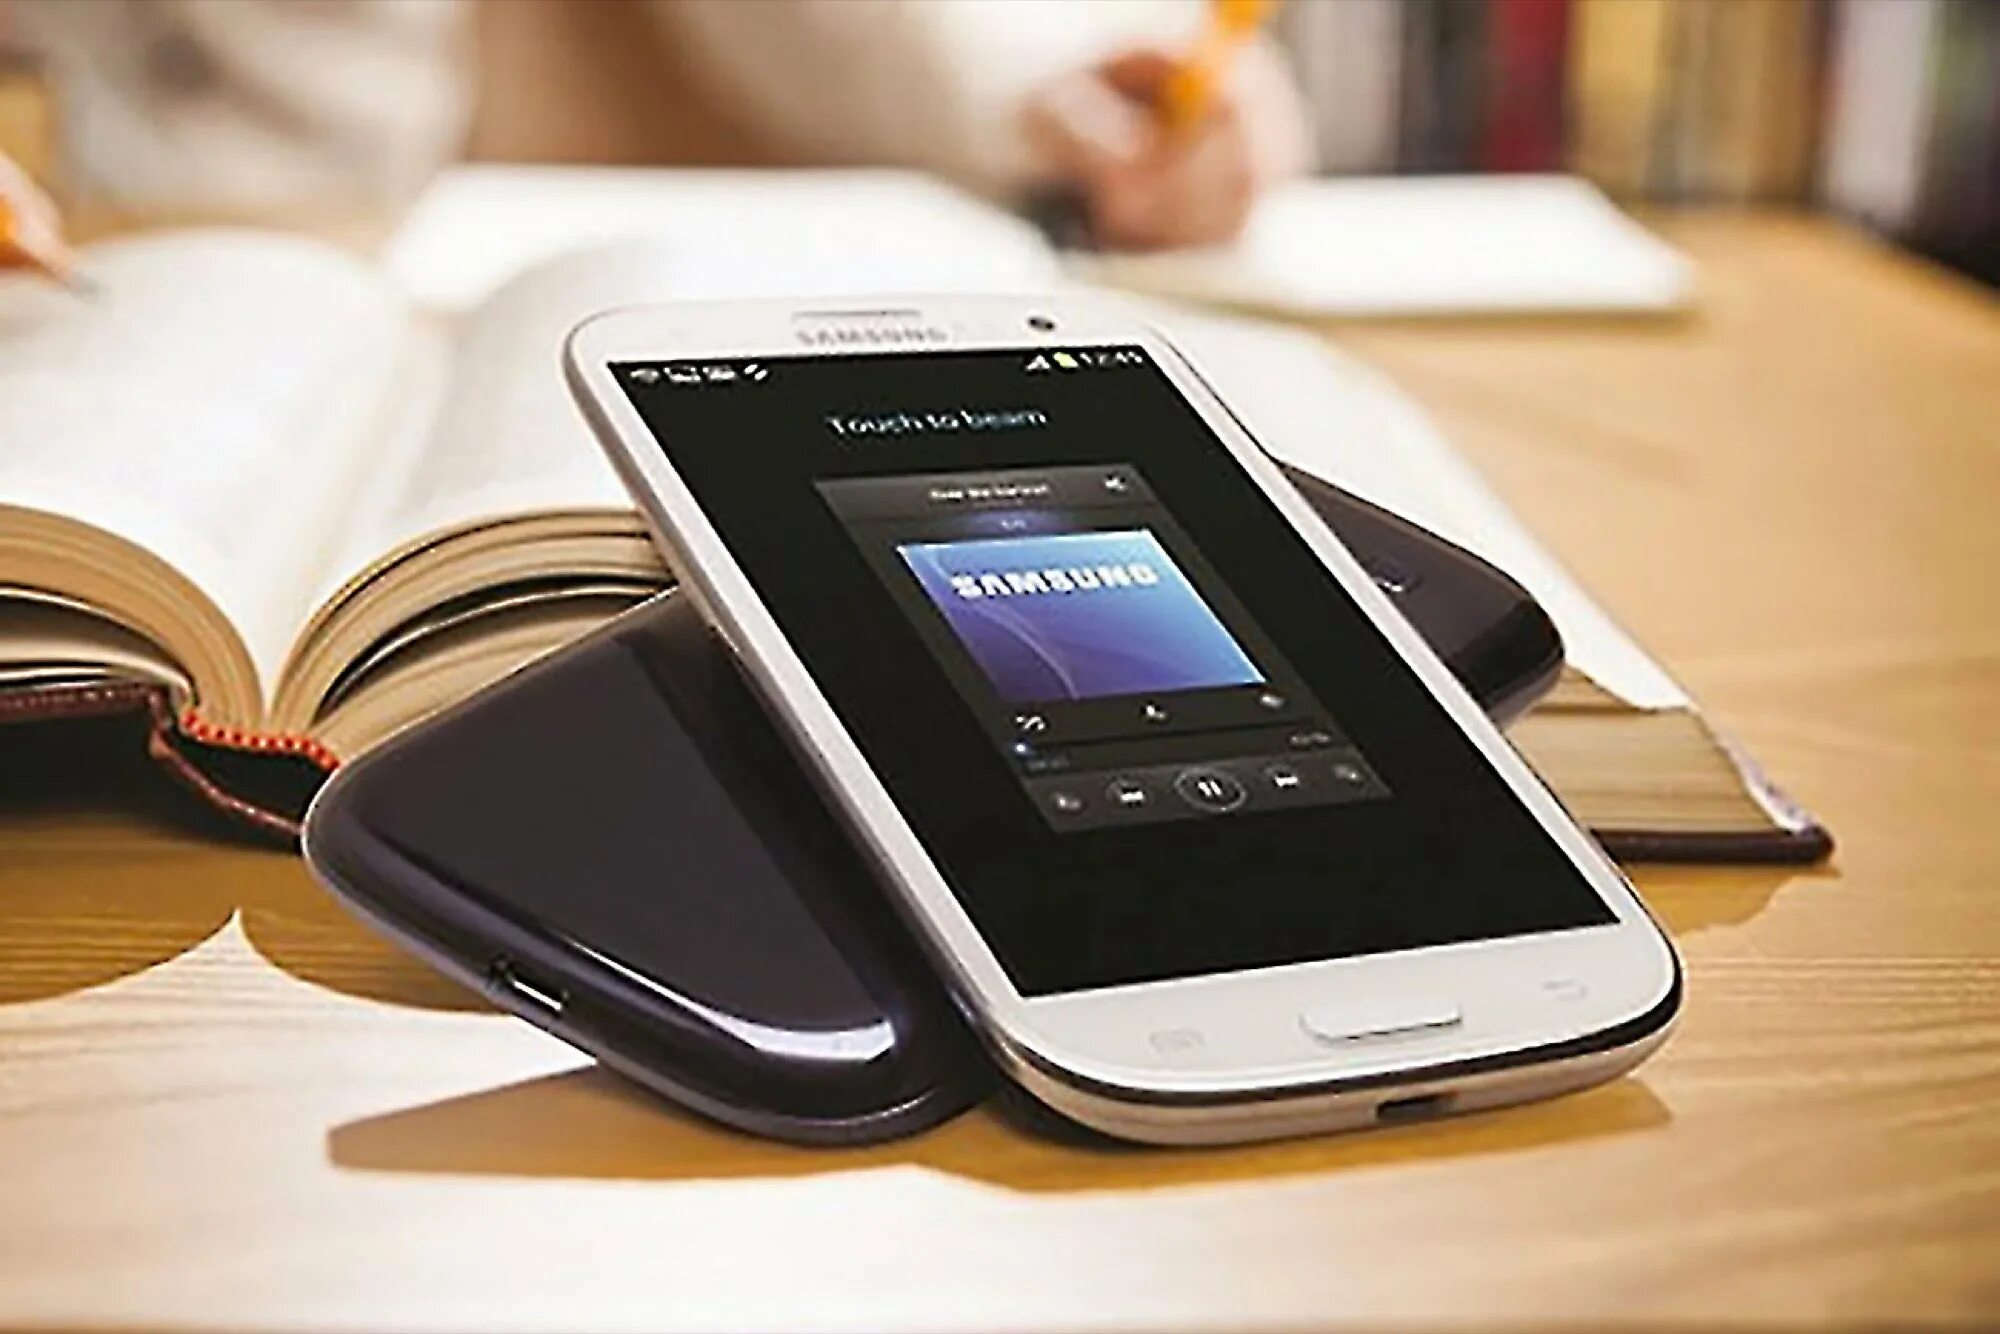 Самсунг Galaxy s3 флагман. Смартфон на столе. Мобильник на столе. Смартфон и планшет на столе. Мобильный телефон на столе